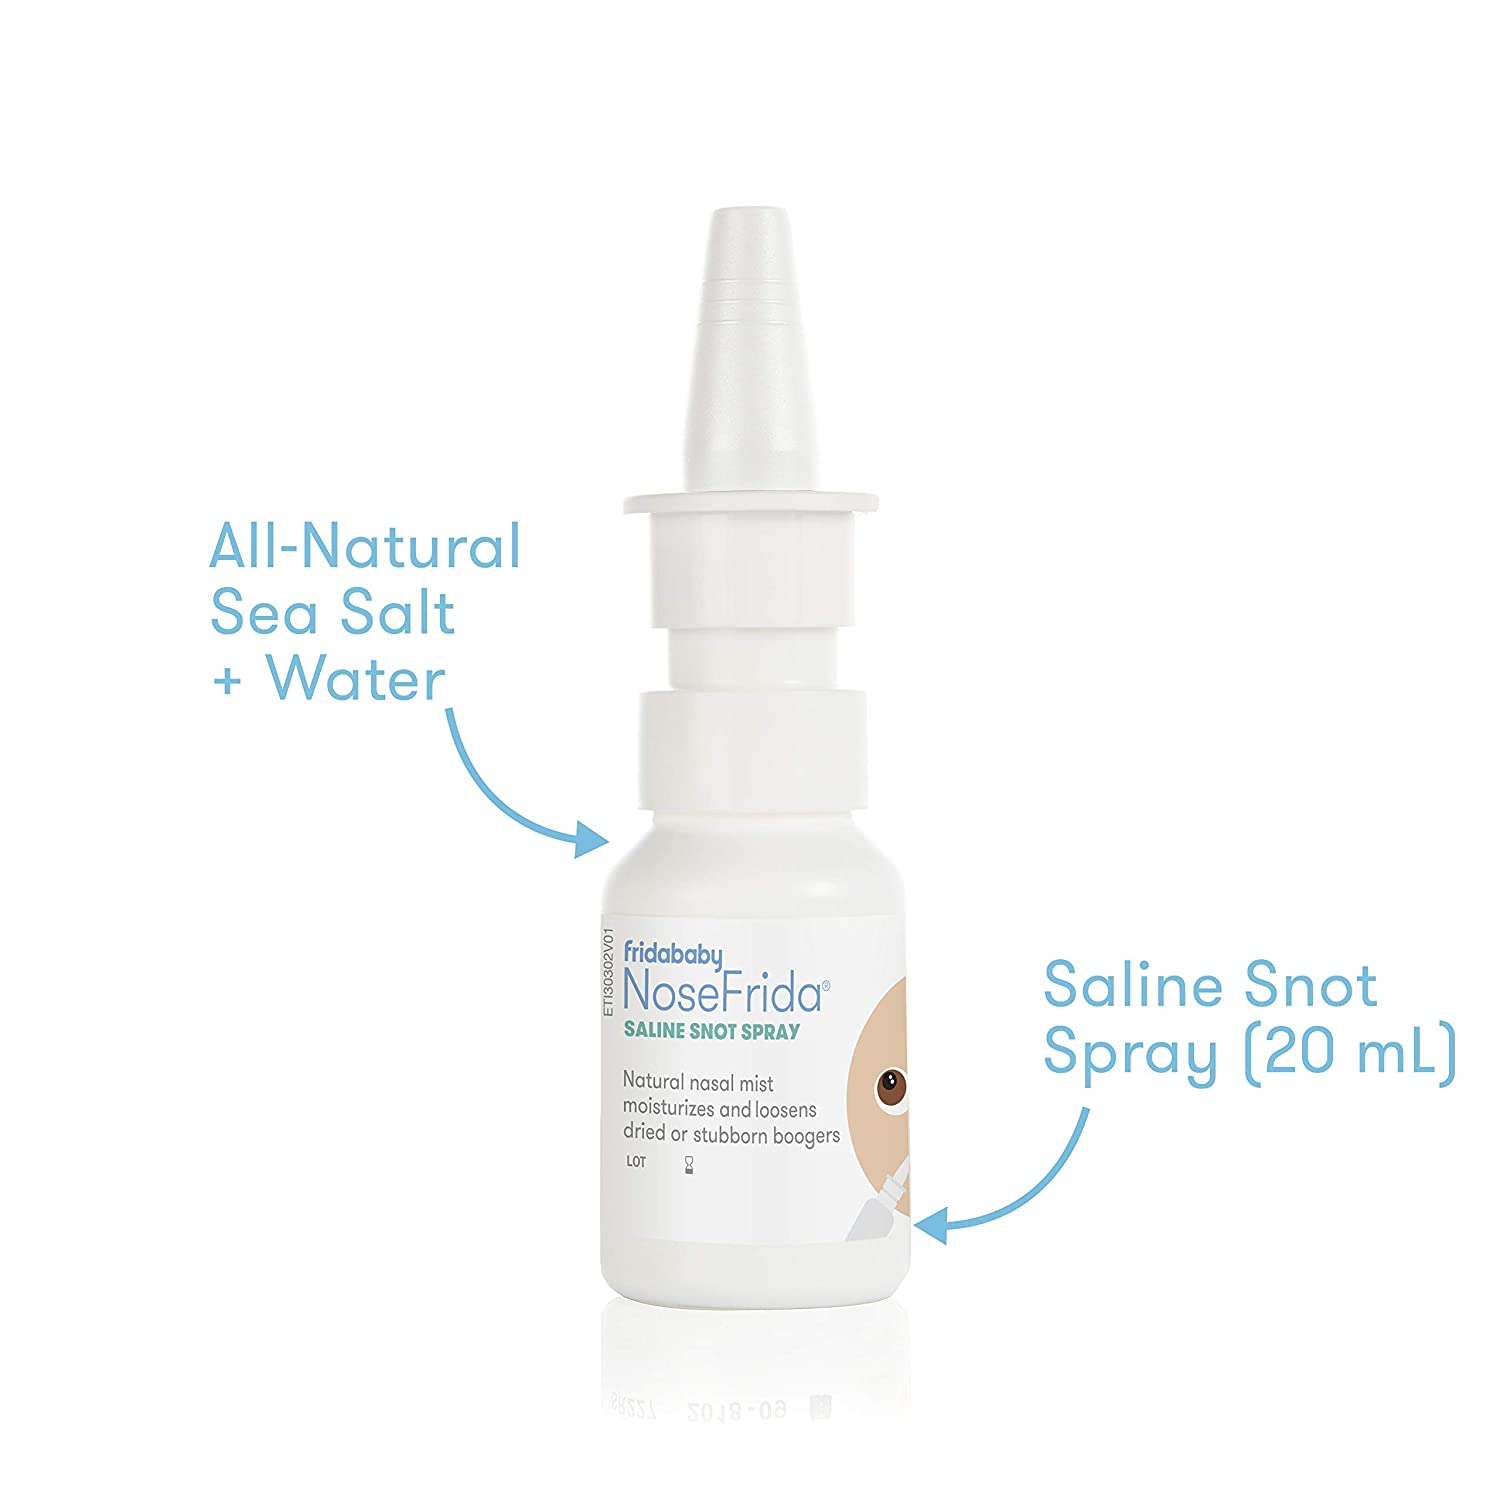 NoseFrida All-Natural Saline Nasal Snot Spray – The Stork Stop